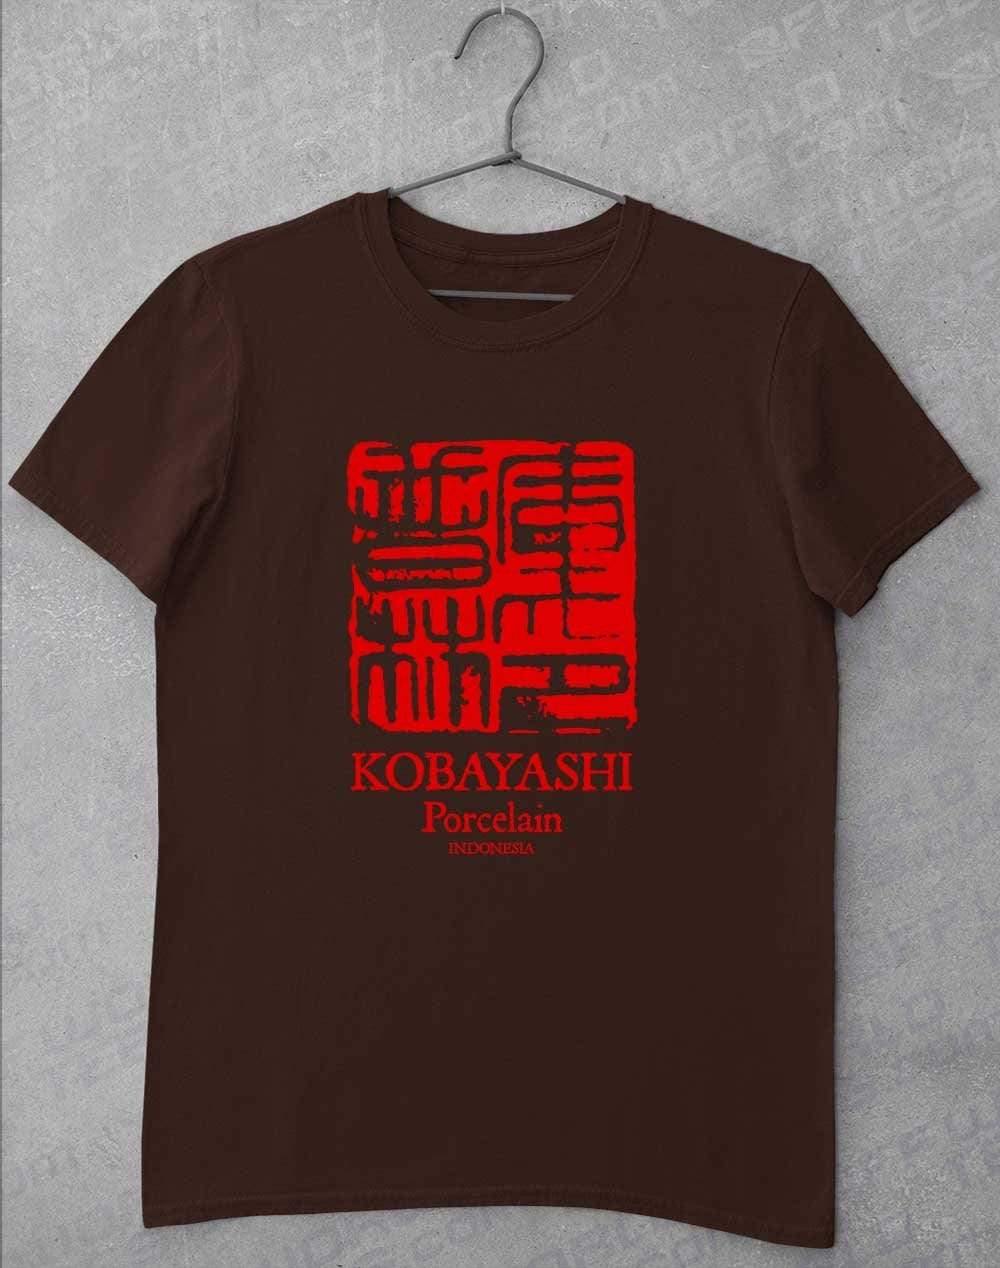 Kobayashi Porcelain T-Shirt S / Dark Chocolate  - Off World Tees